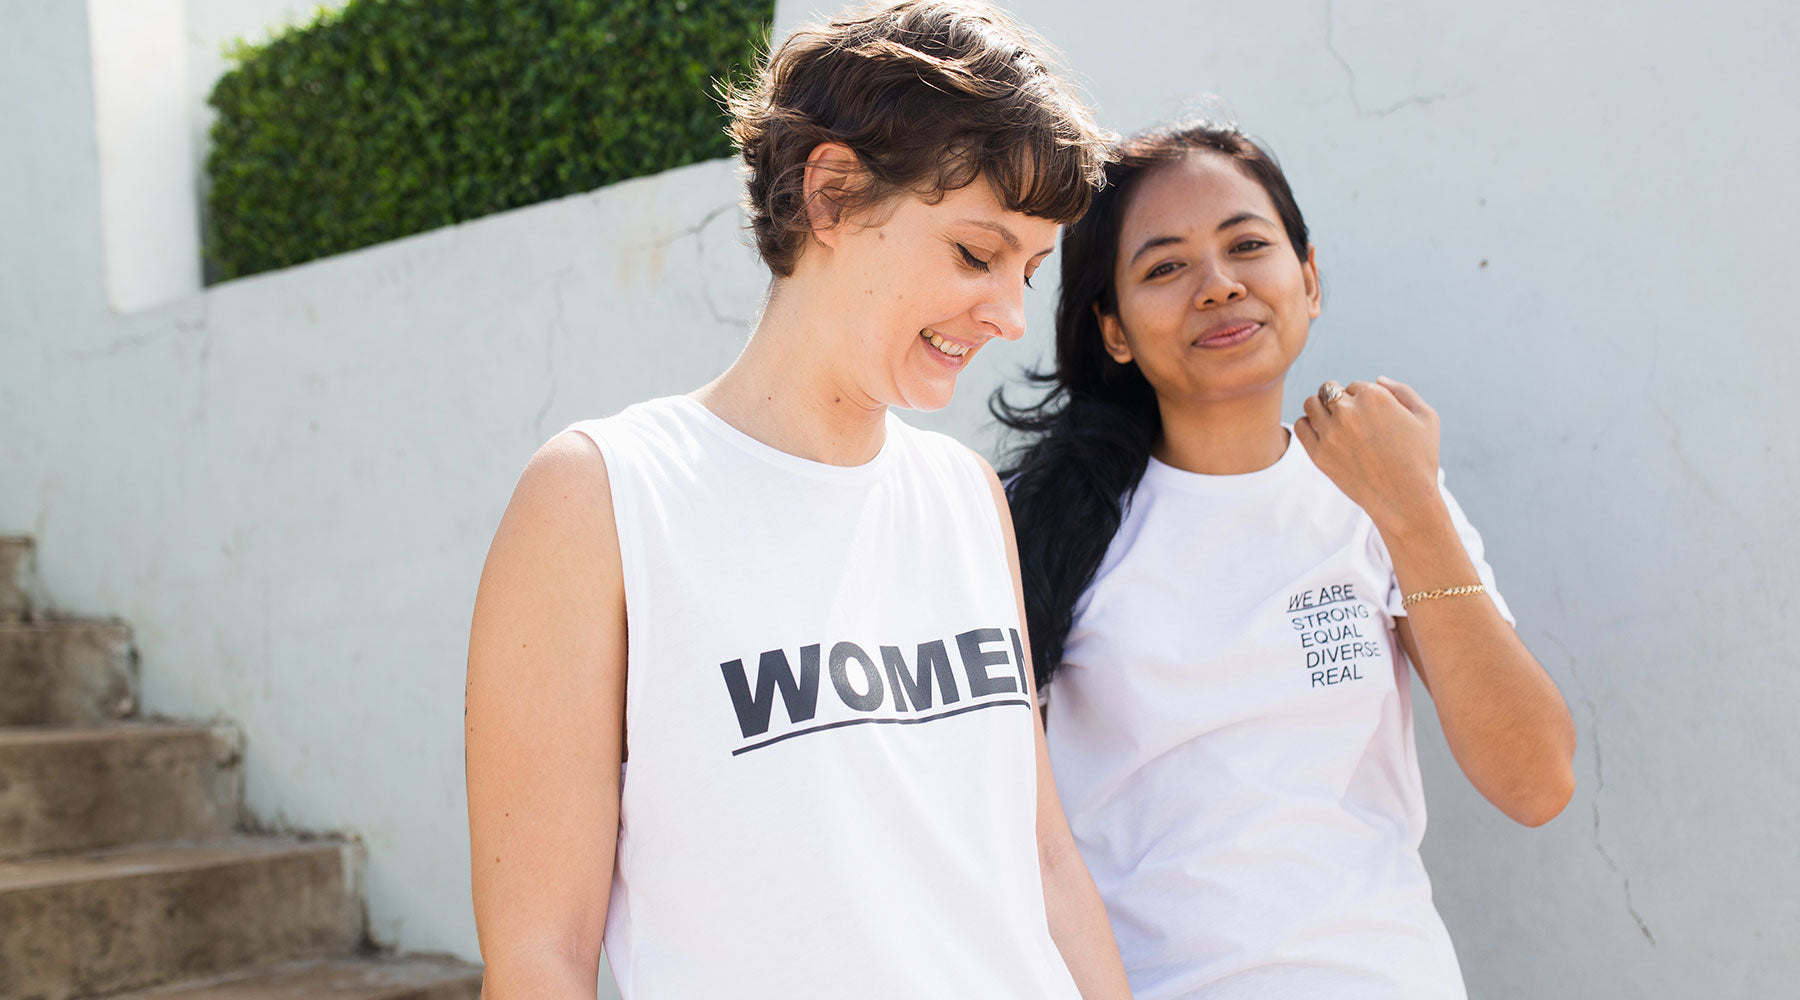 WOMEN - Ethical feminist t-shirts 